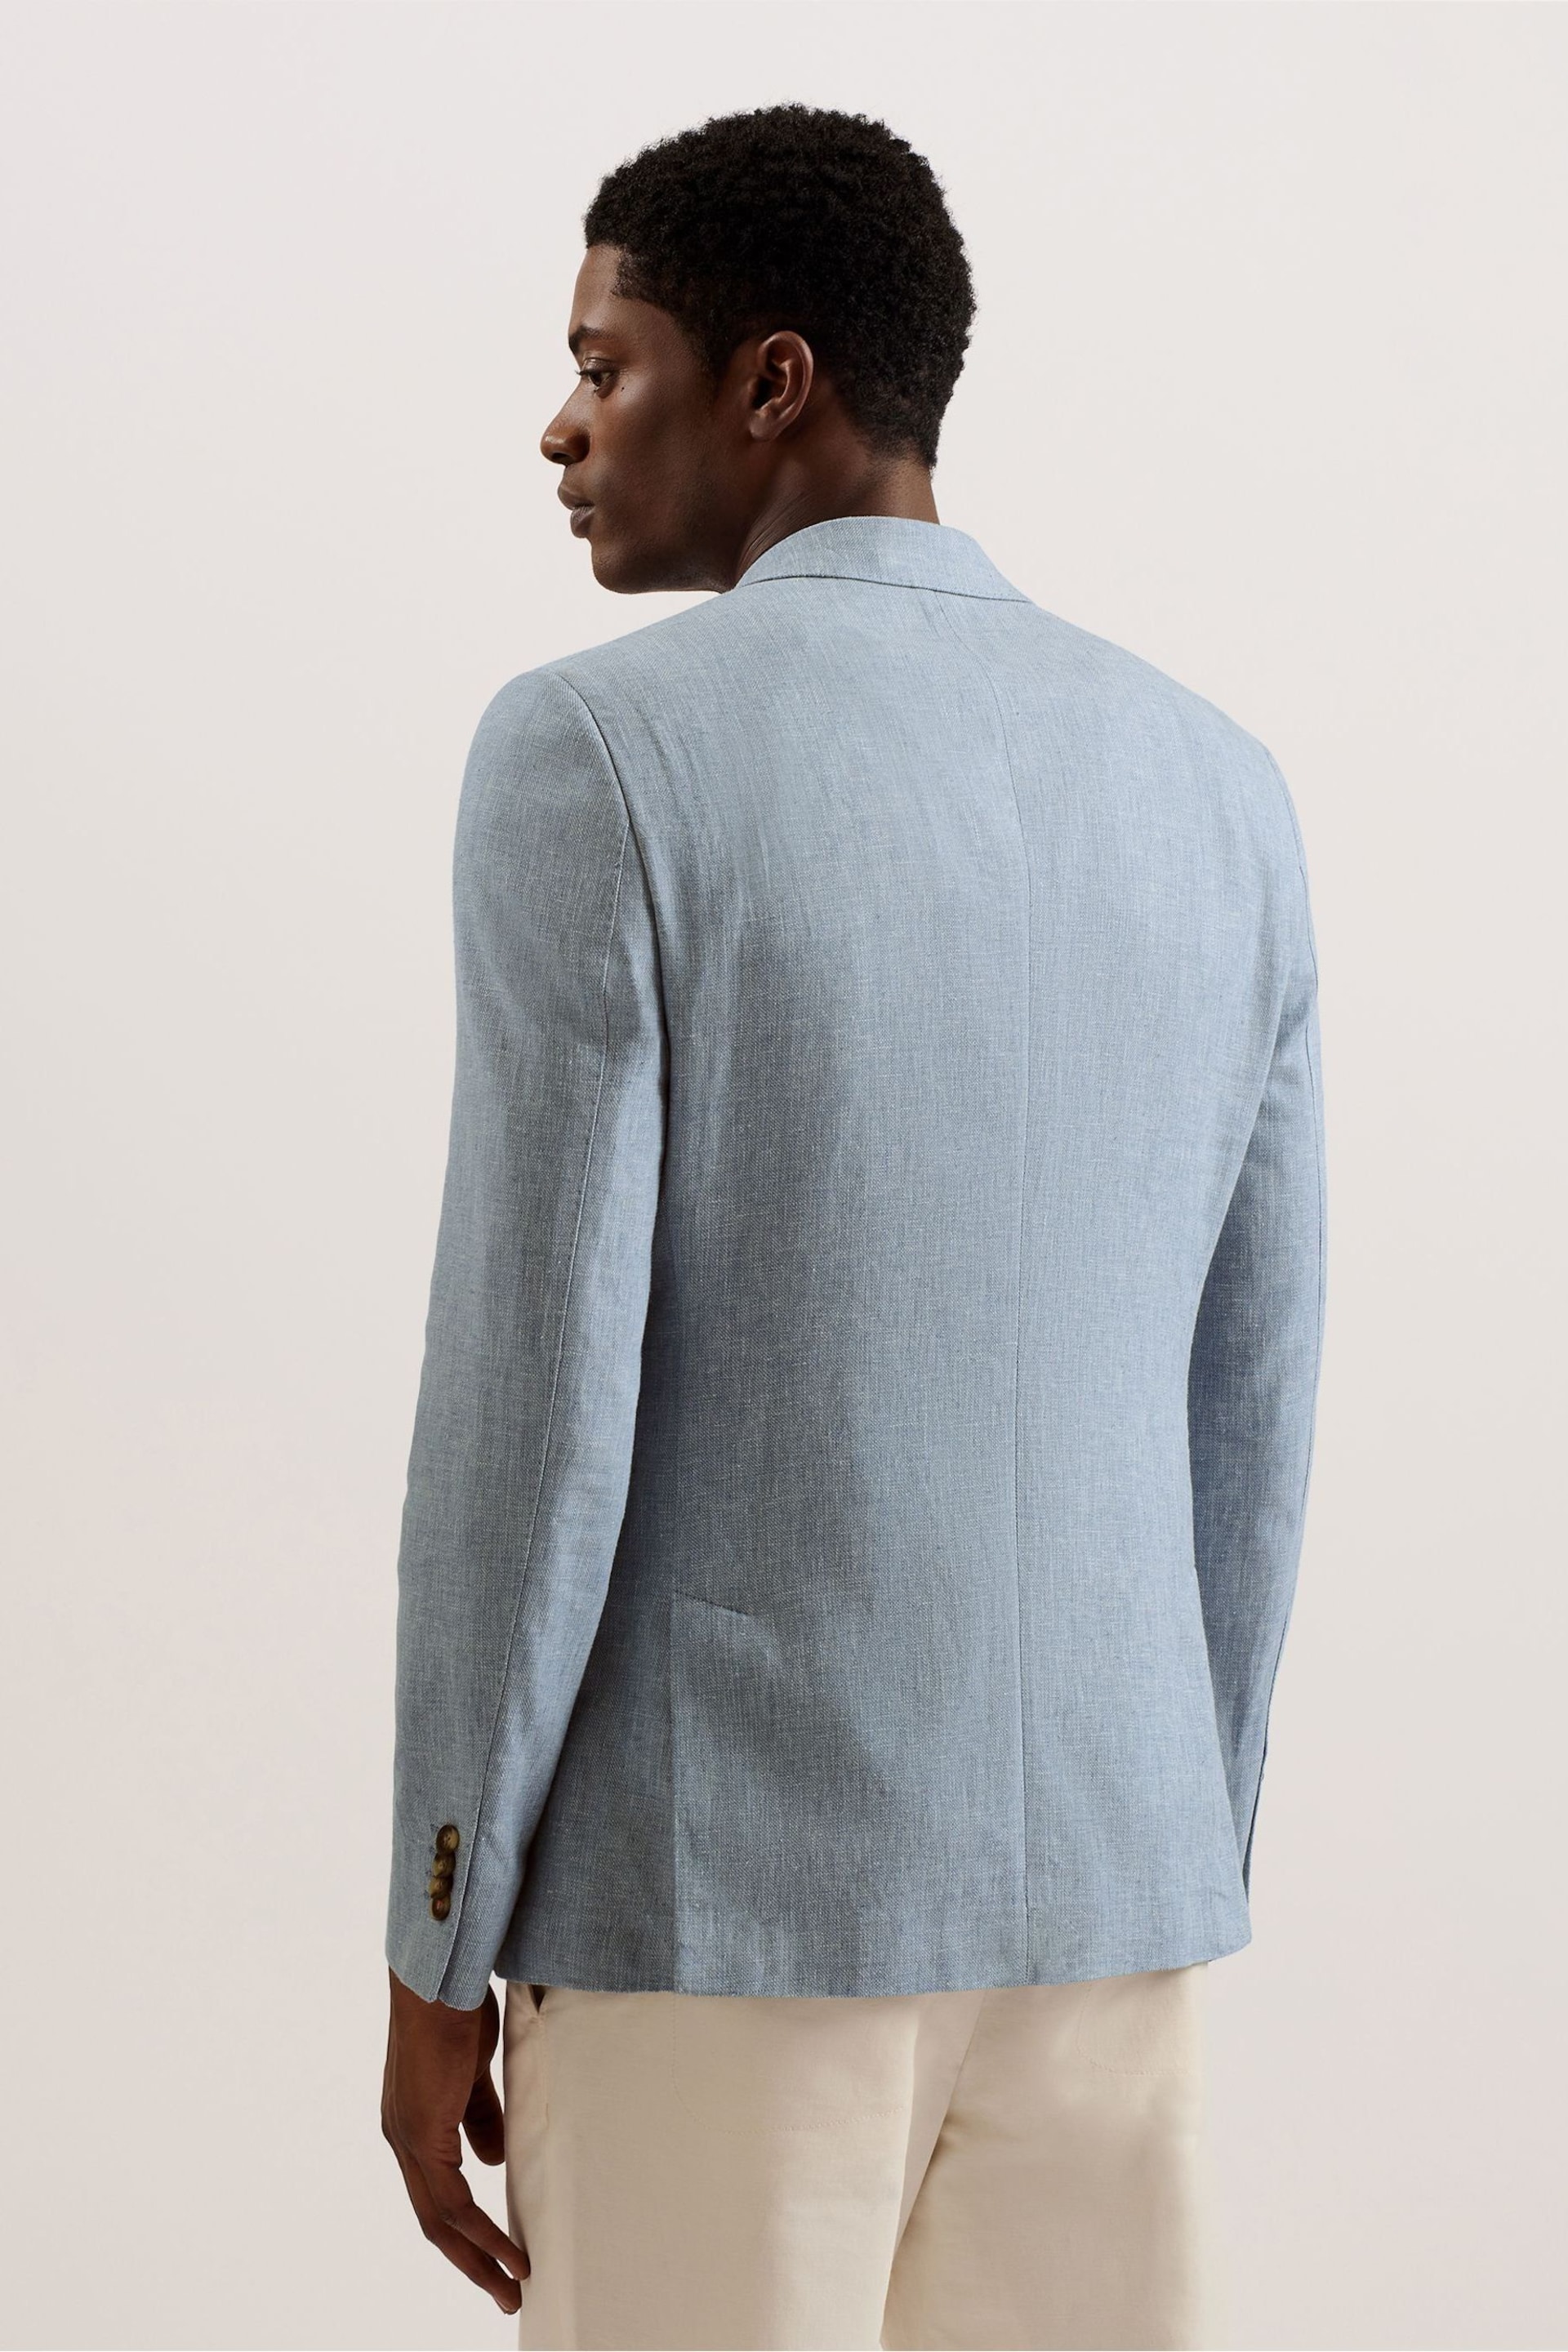 Ted Baker Blue Damaskj Slim Cotton Linen Blazer - Image 3 of 6